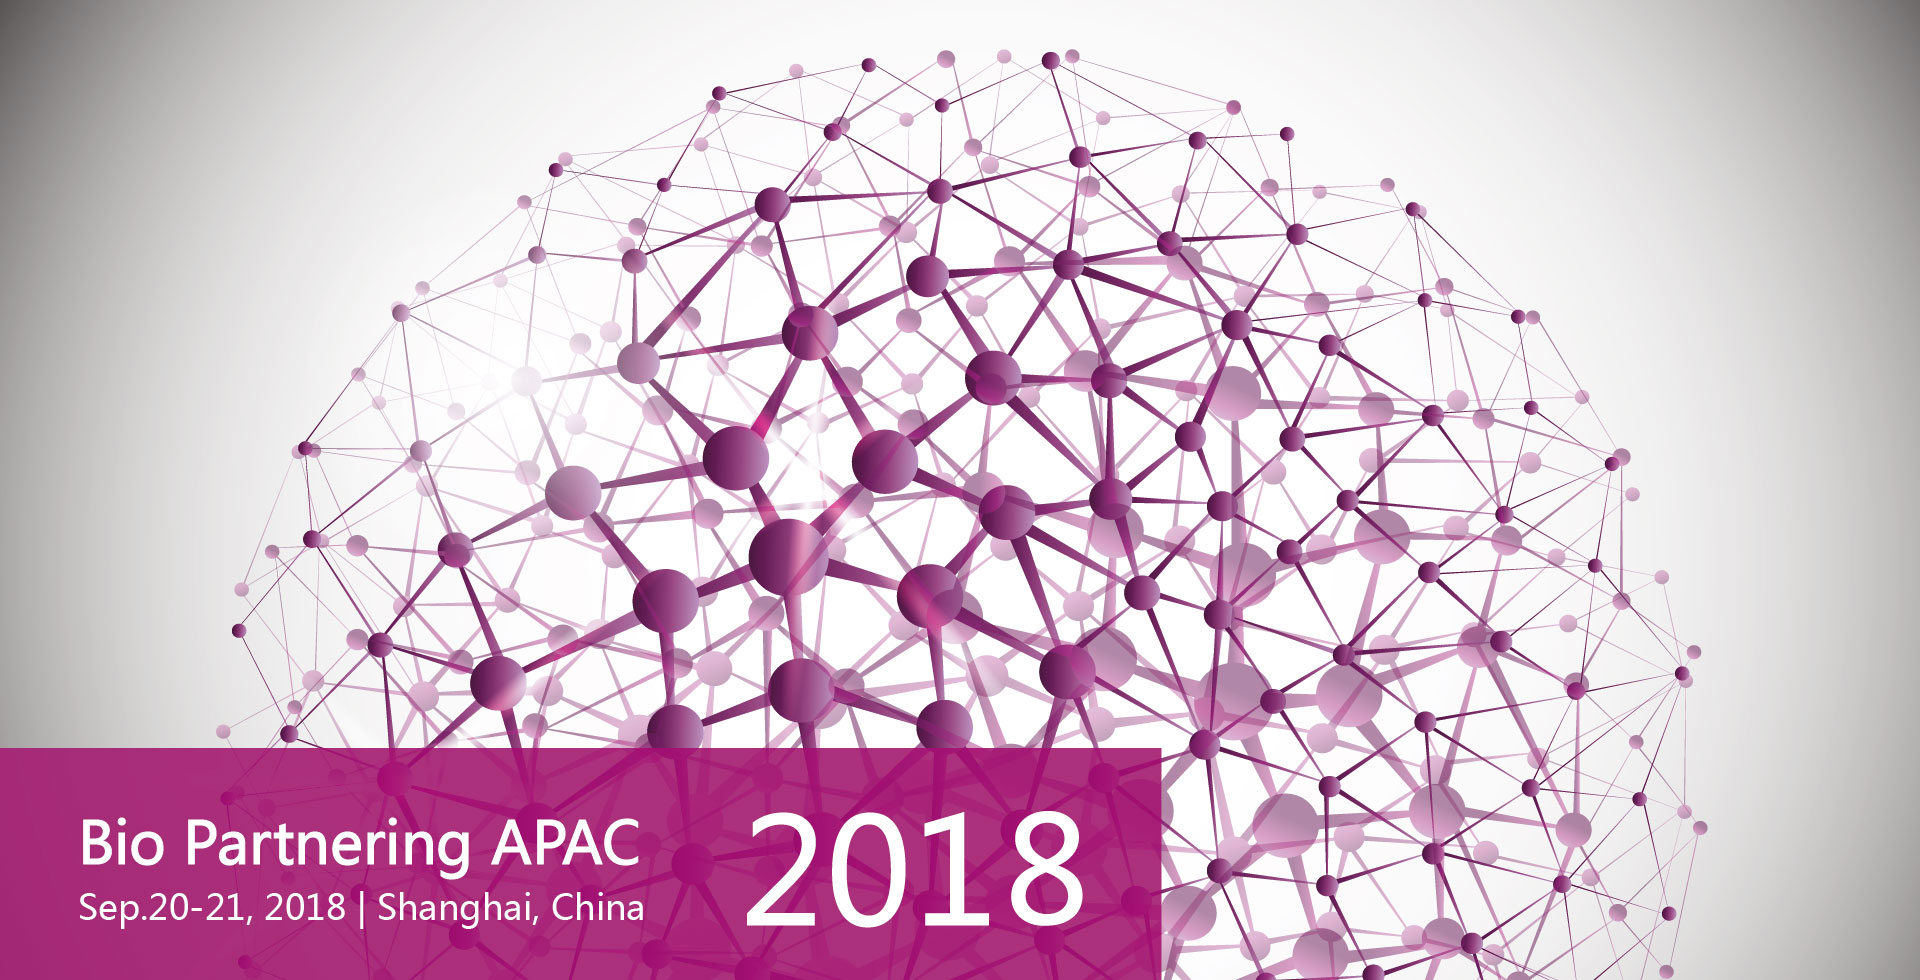 Bio Partnering APAC 2018